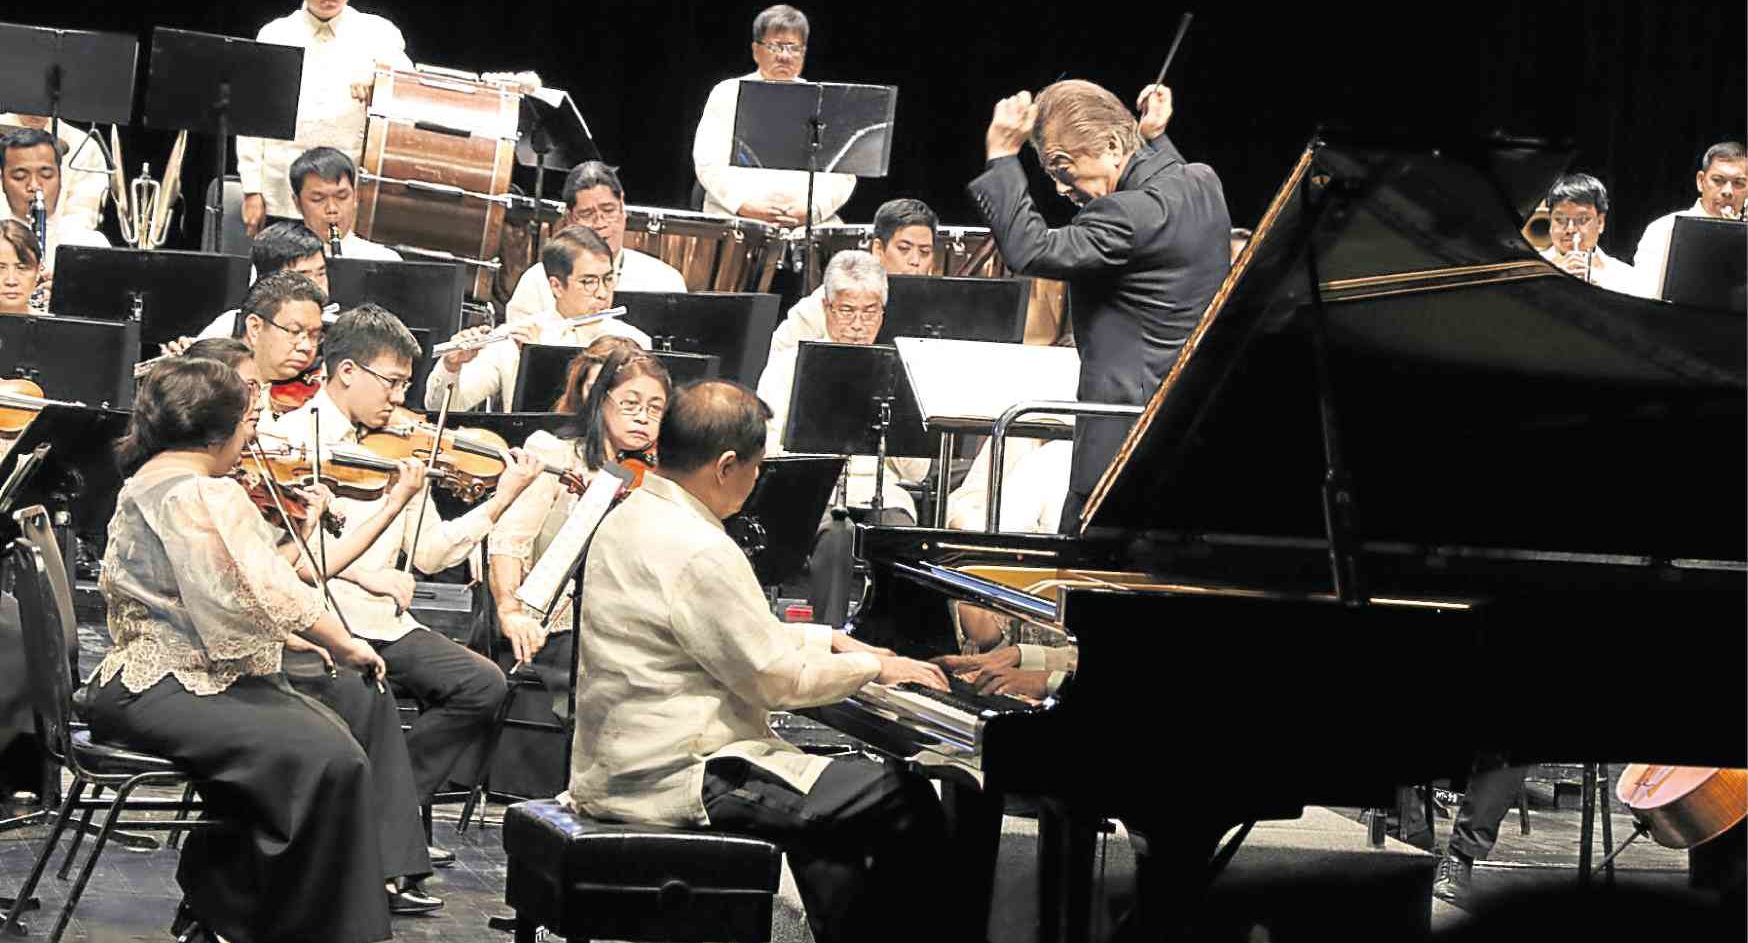 Pianist Raul Sunico performs with the Philippine Philharmonic Orchestra under musical director Yoshikazu Fukumura (right).